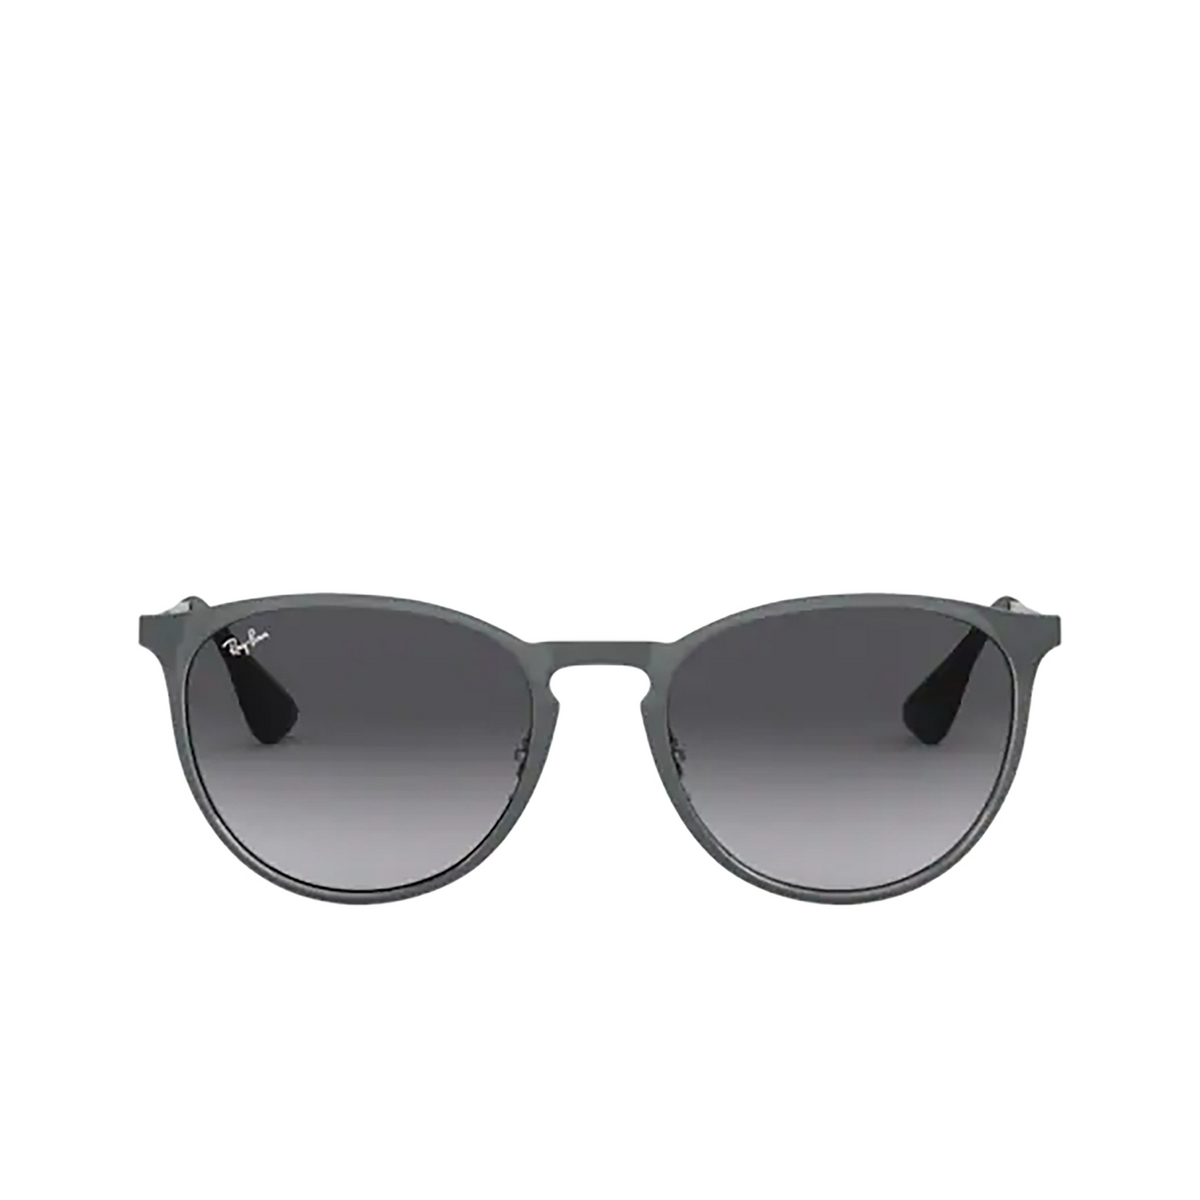 Ray-Ban® Round Sunglasses: RB3539 Erika Metal color 192/8G Metallic Grey - 1/3